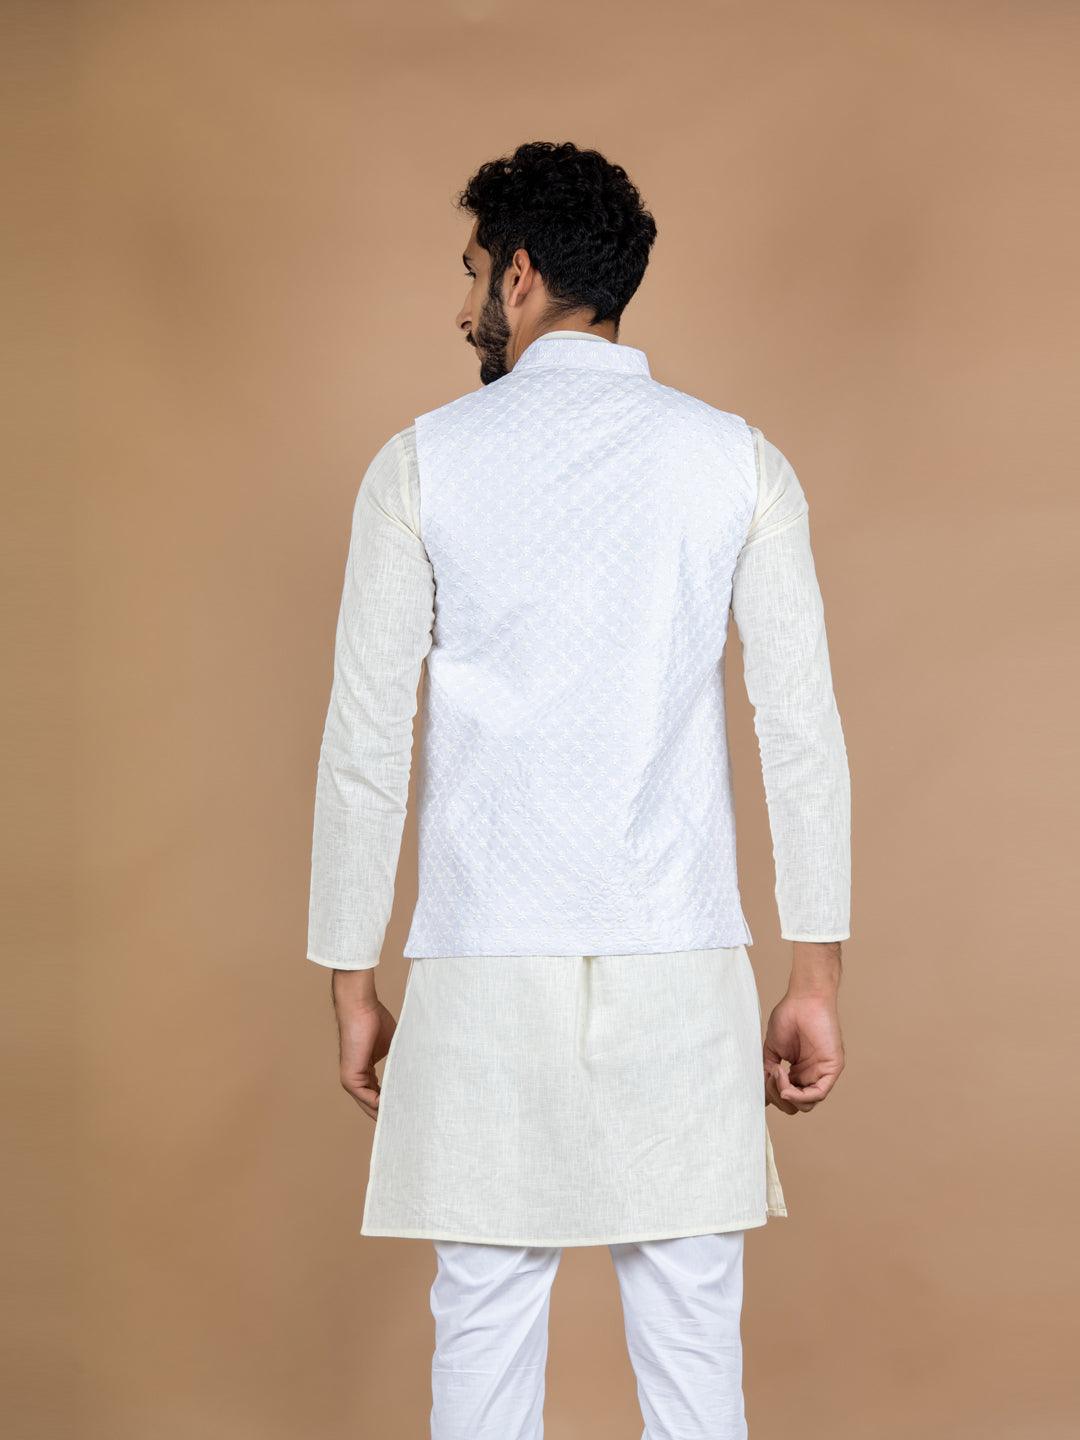 Brown Kurta Pyjama With Embroidered Nehru Jacket